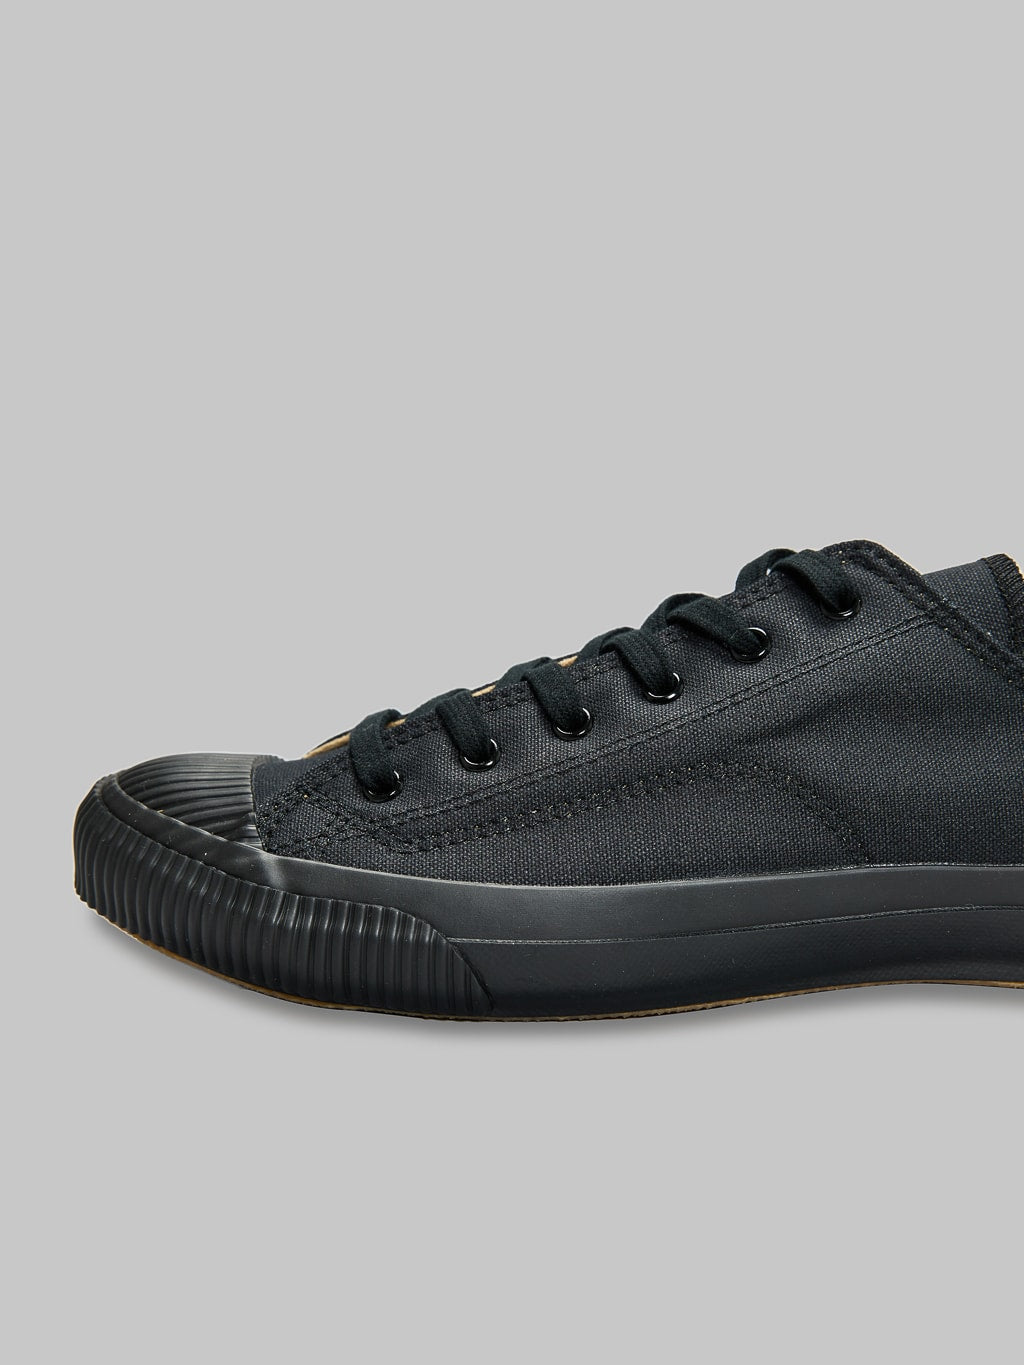 Pras shellcap low sneakers kuro black sole